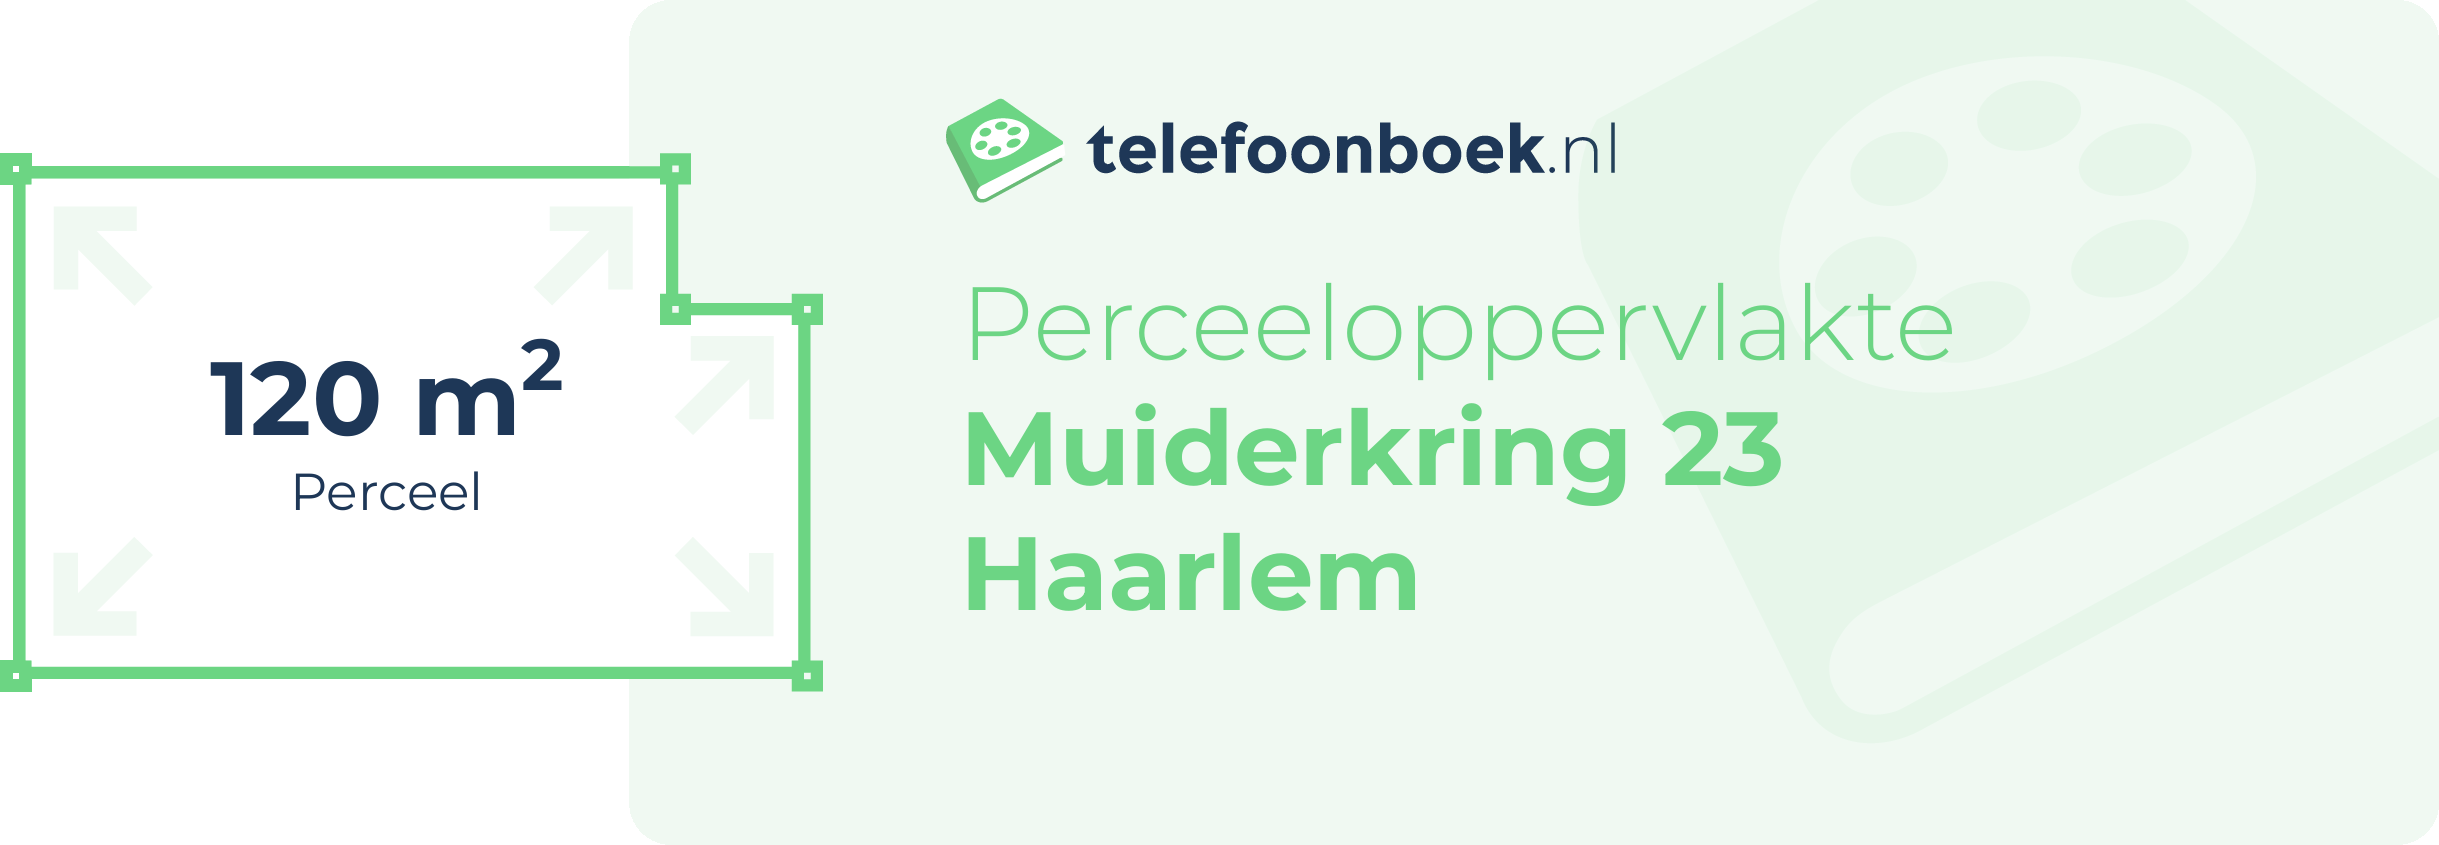 Perceeloppervlakte Muiderkring 23 Haarlem